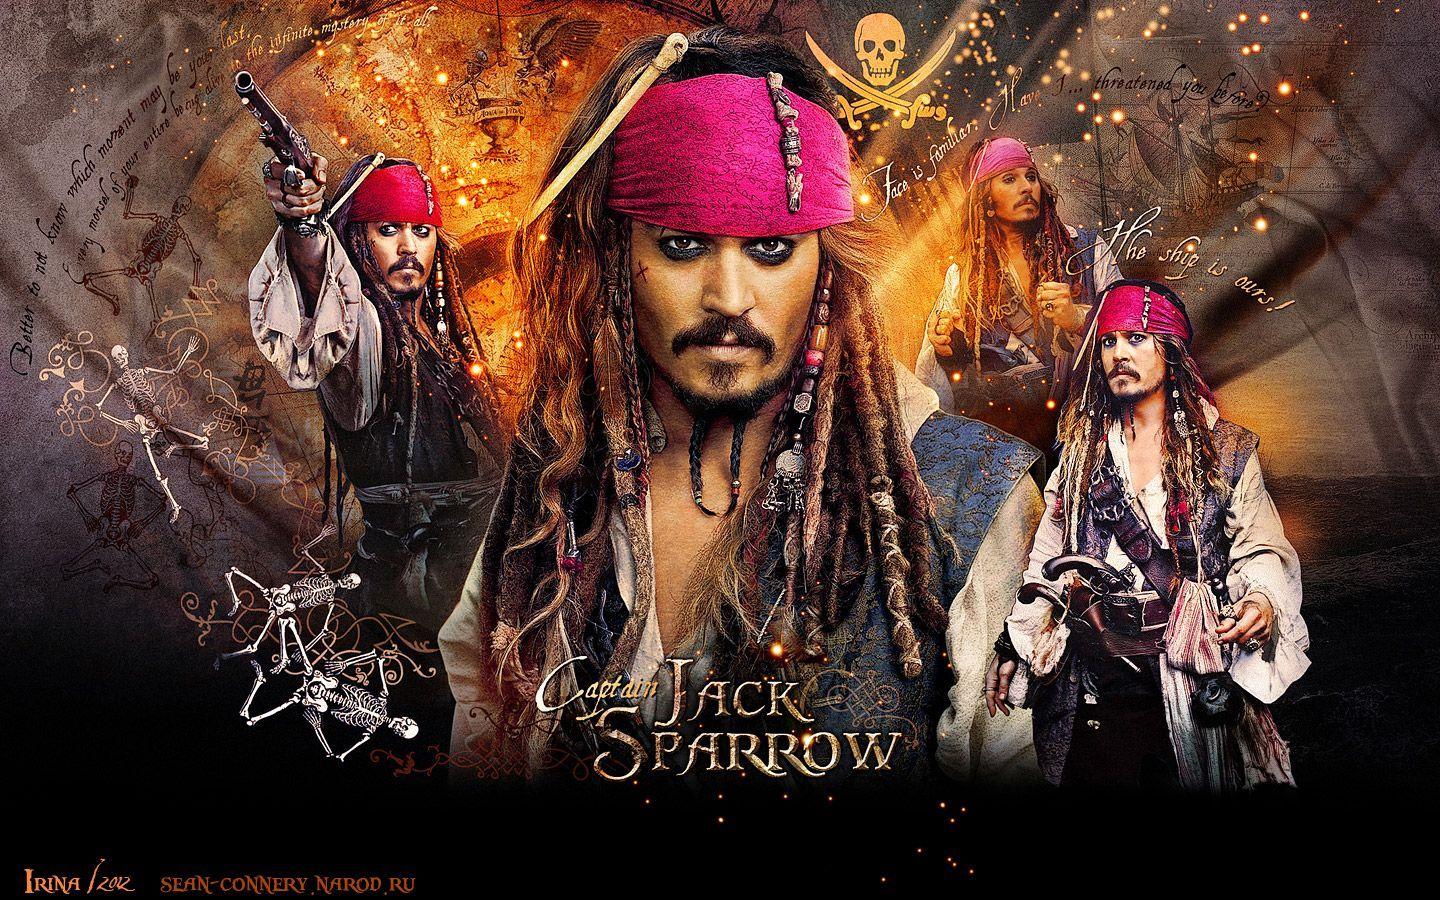 Pirates of the caribbean wallpaper, desktop wallpaper free